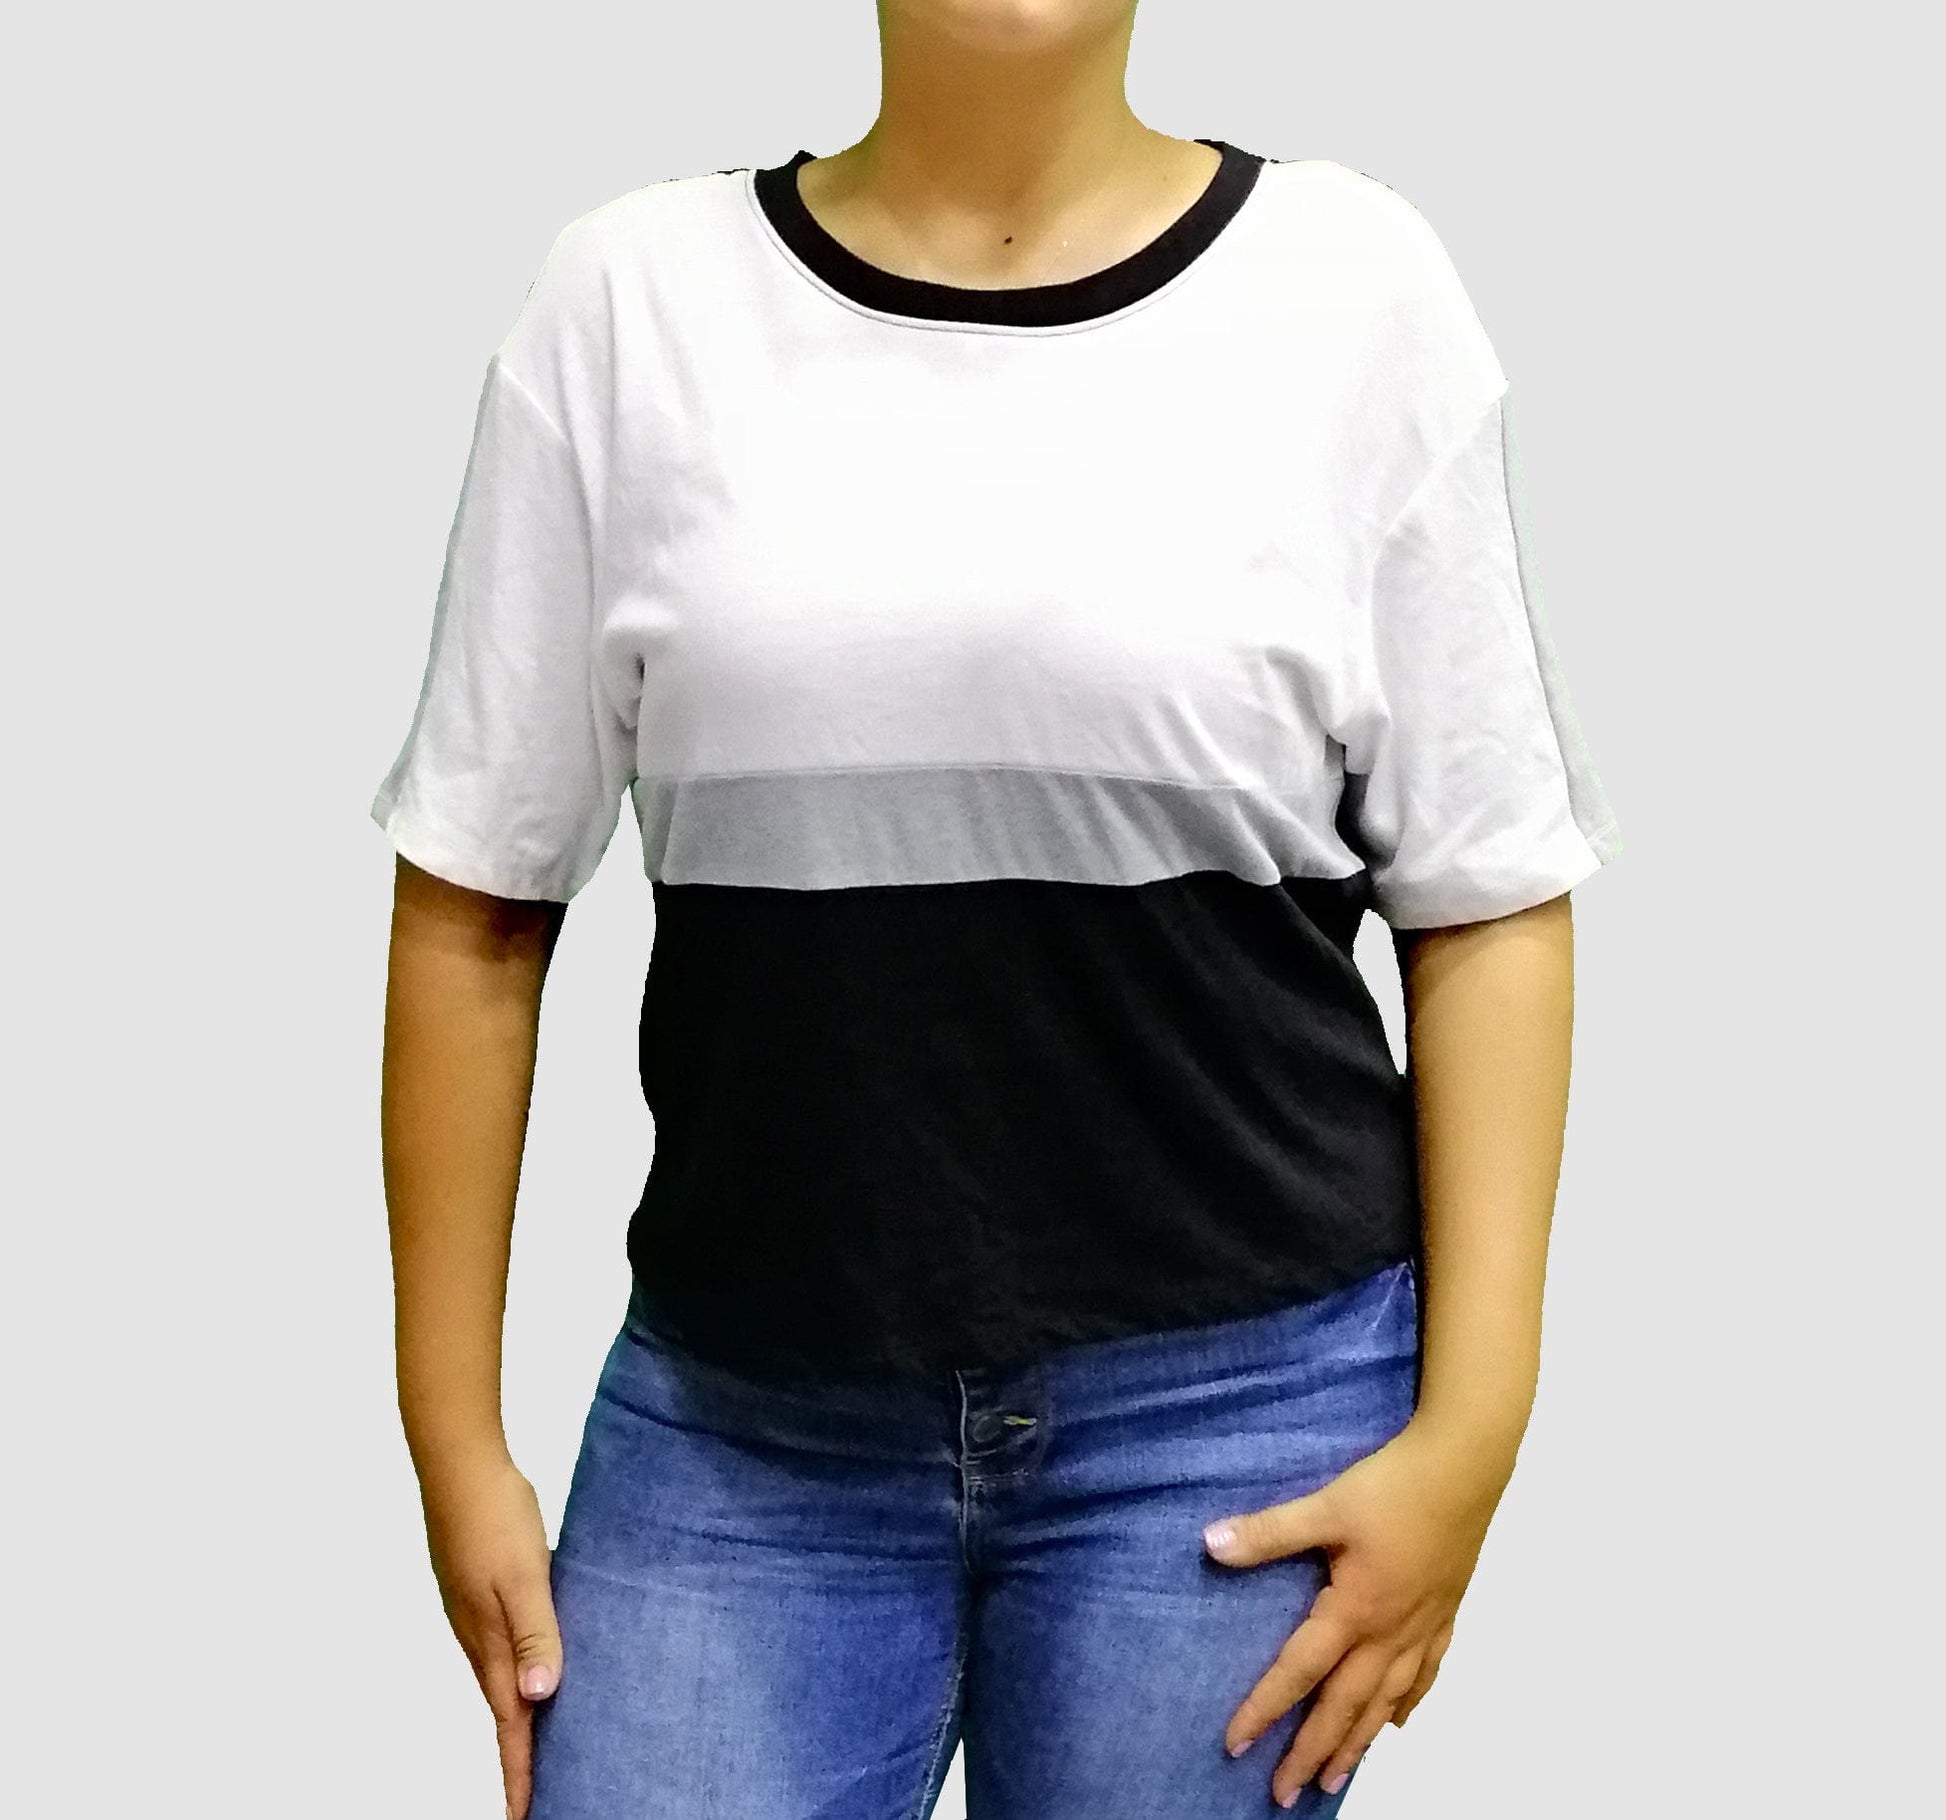 Flirtitude Womens Tops Large / Black-White-Grey Short Sleeve Top